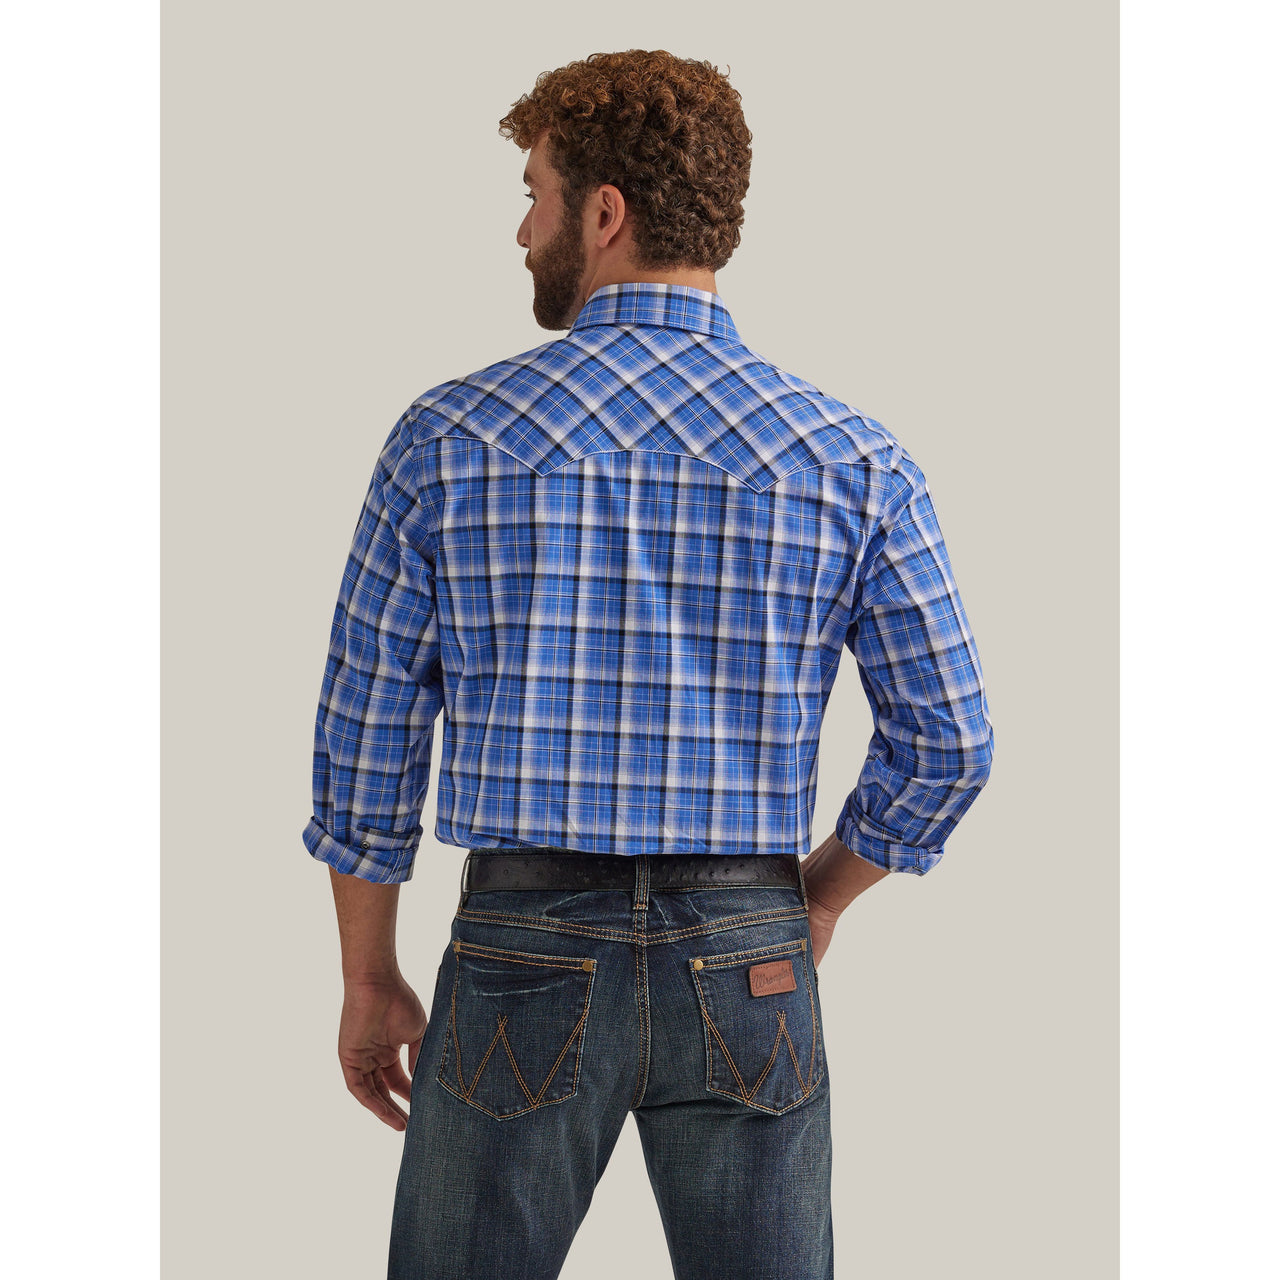 Wrangler Men's Retro Core Long Sleeve Shirt -